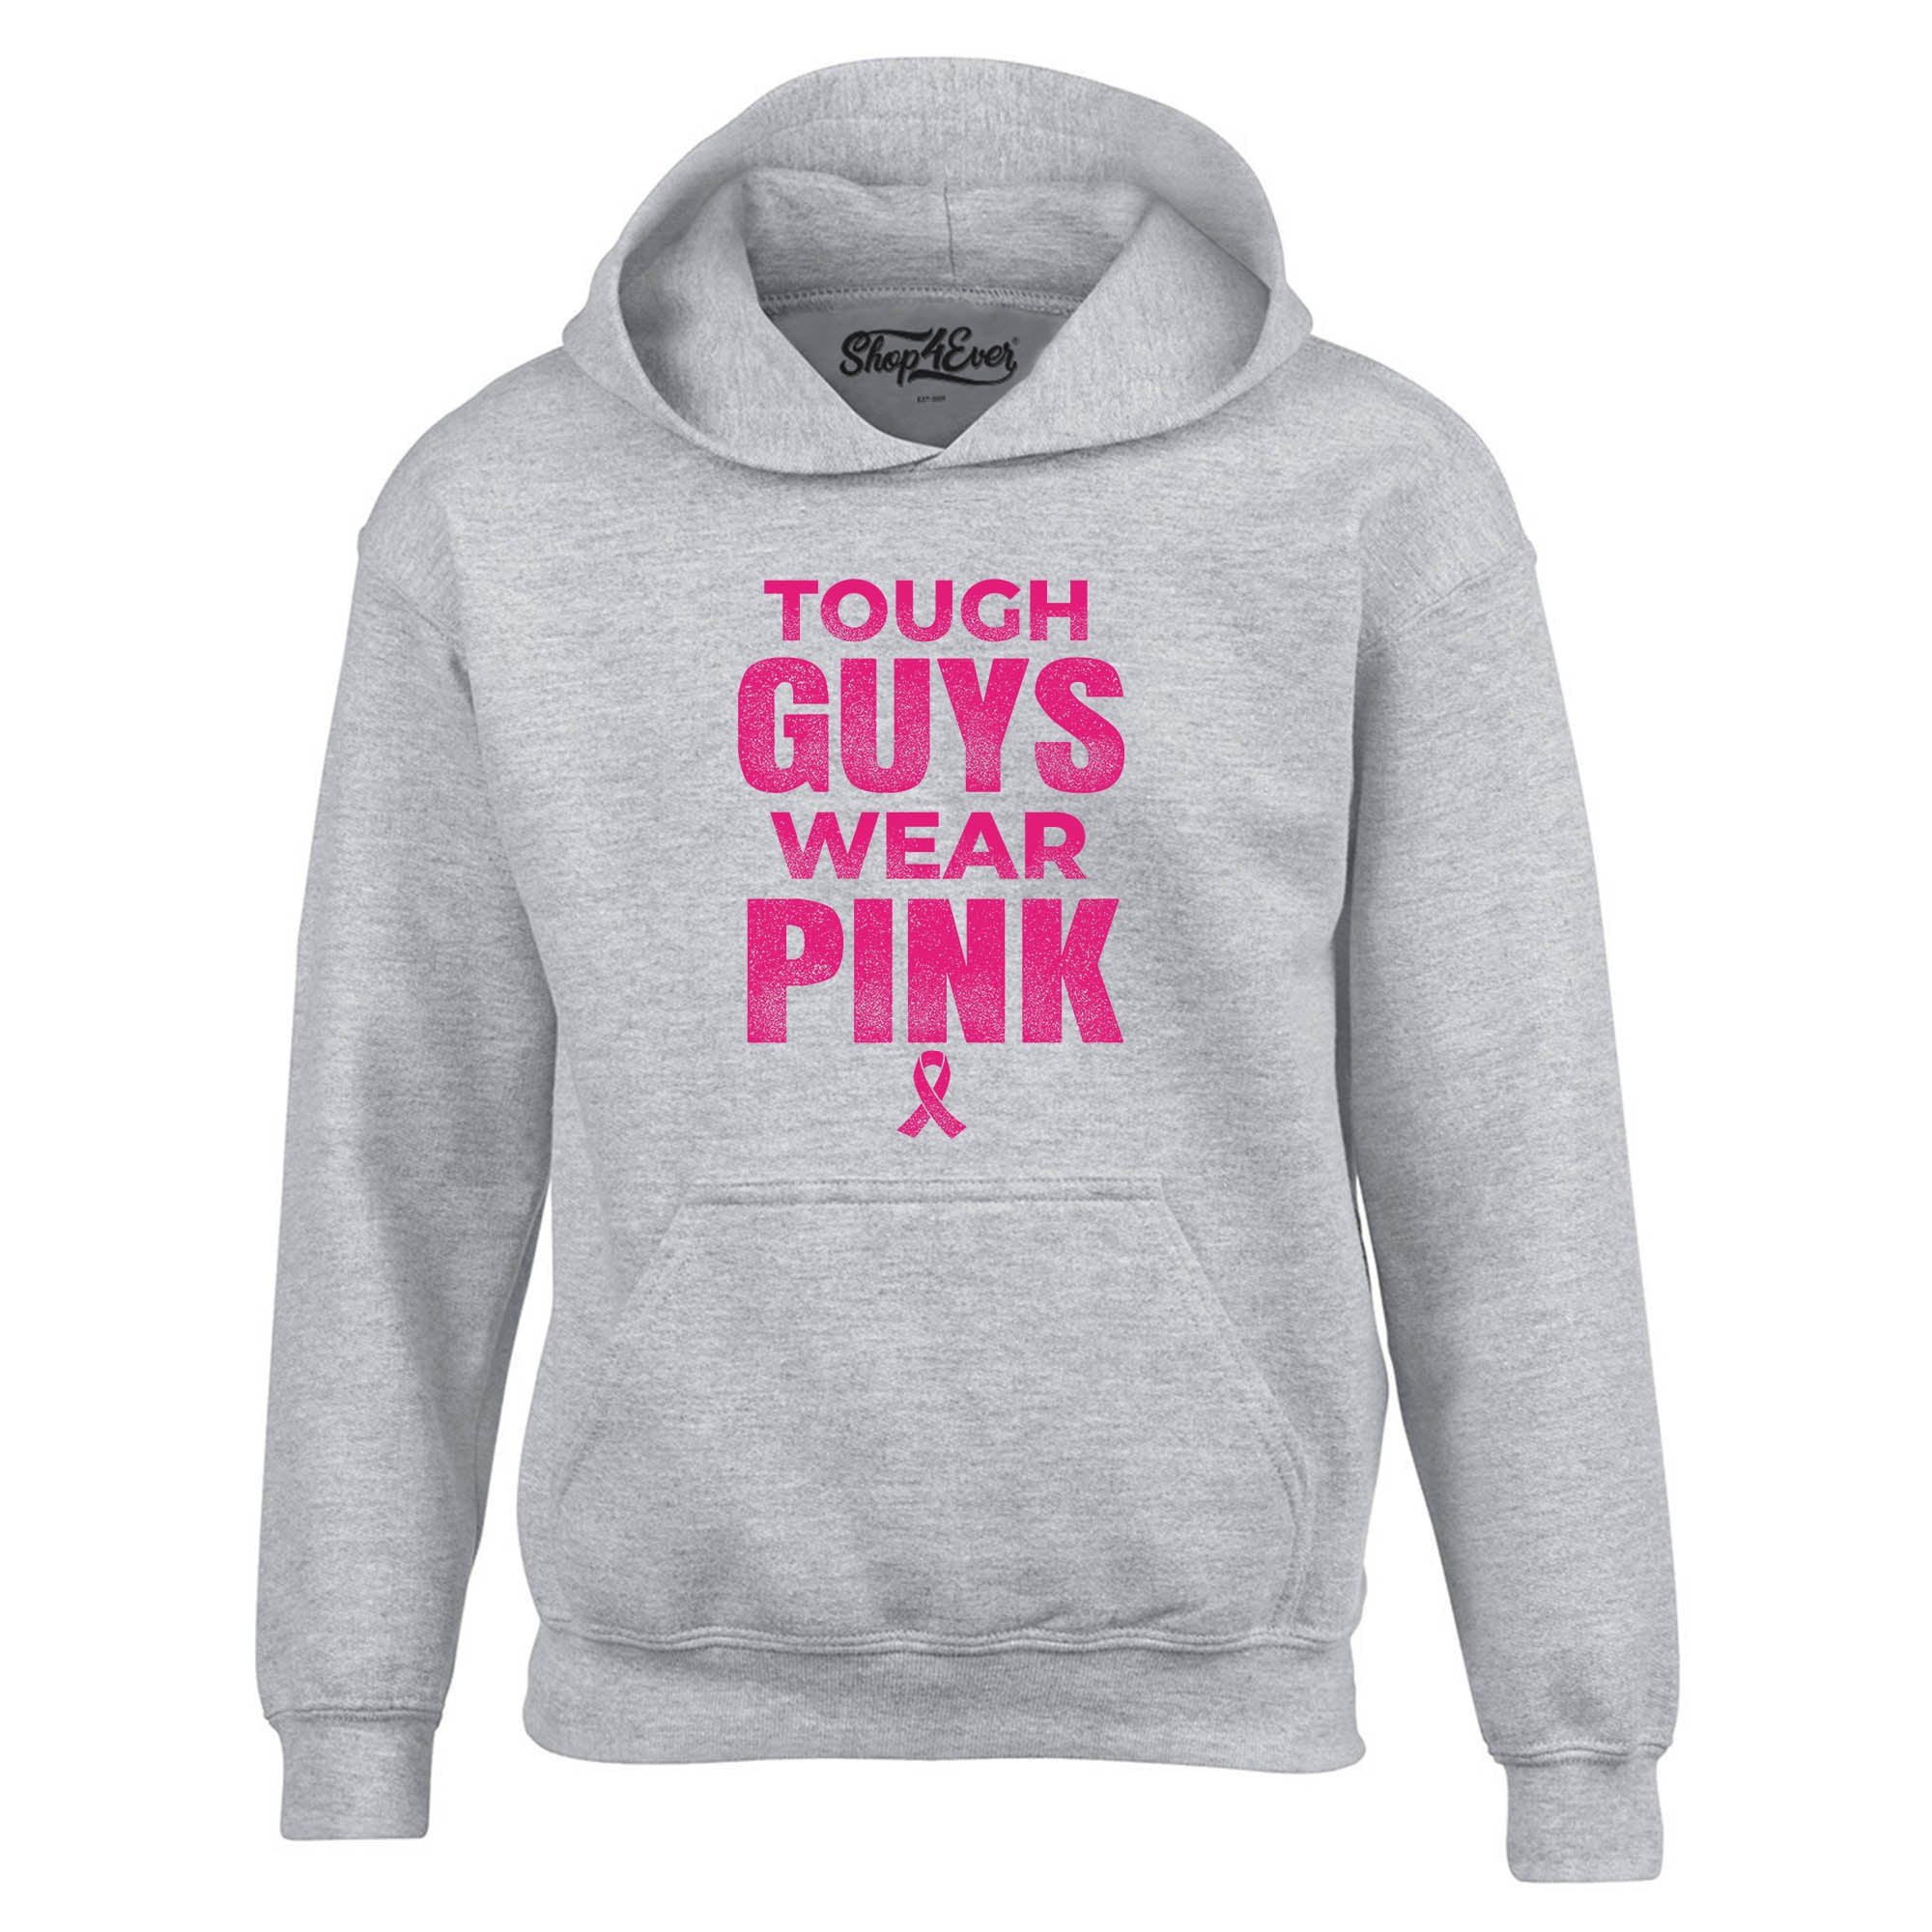 Tough Guys Wear Pink Hoodies Breast Cancer Awareness Sweatshirts